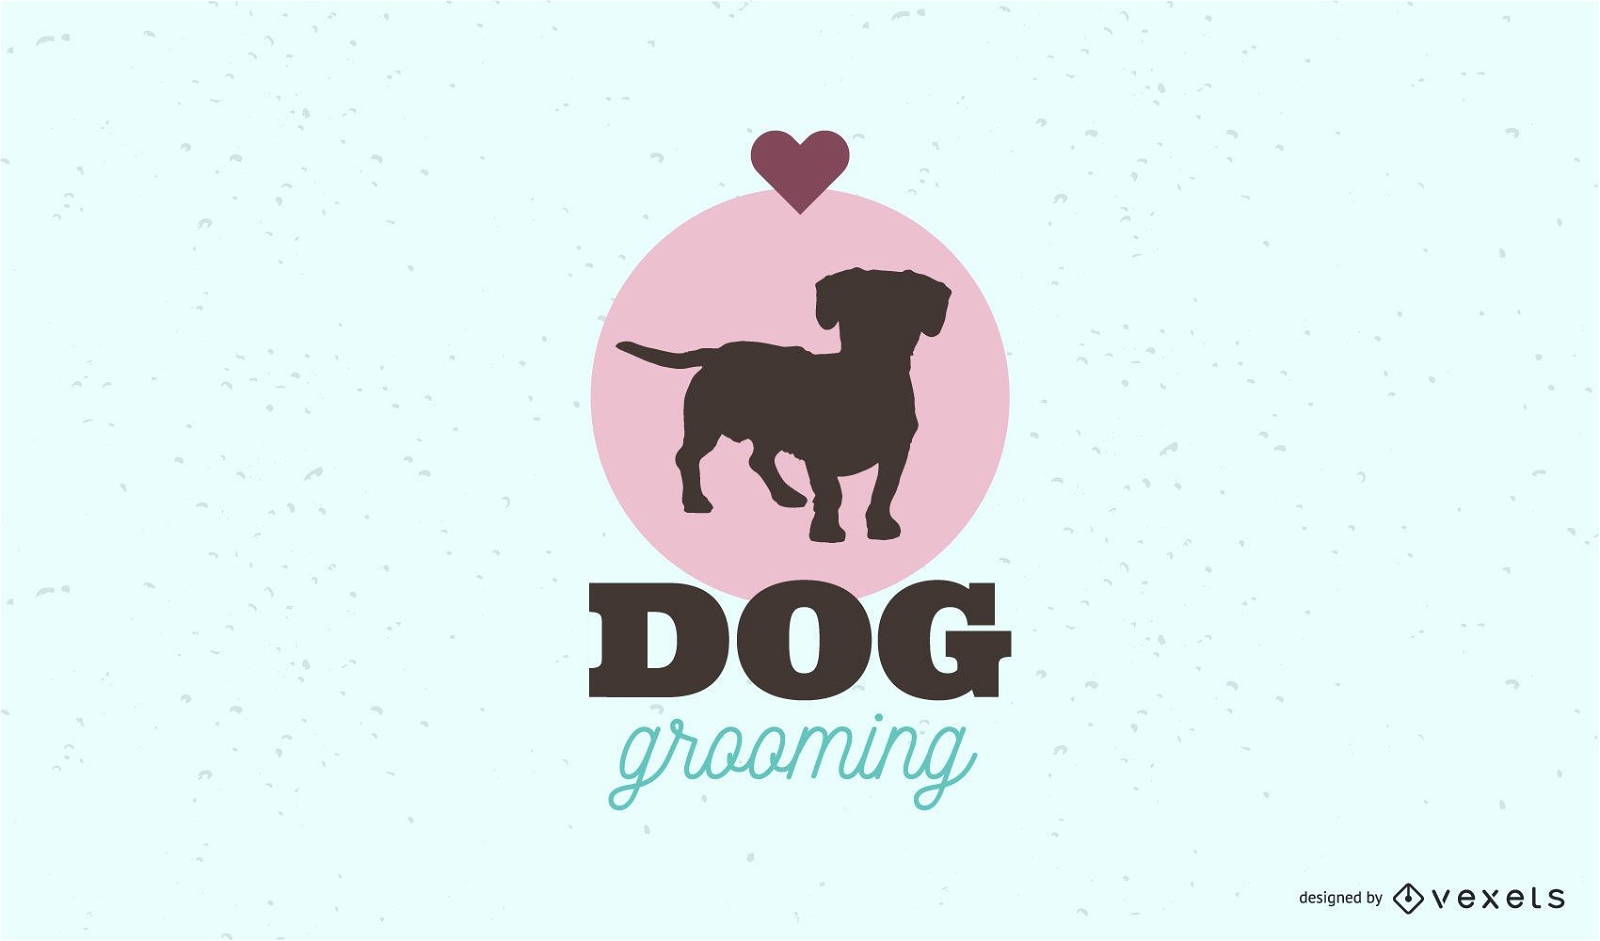 Dog grooming logo template